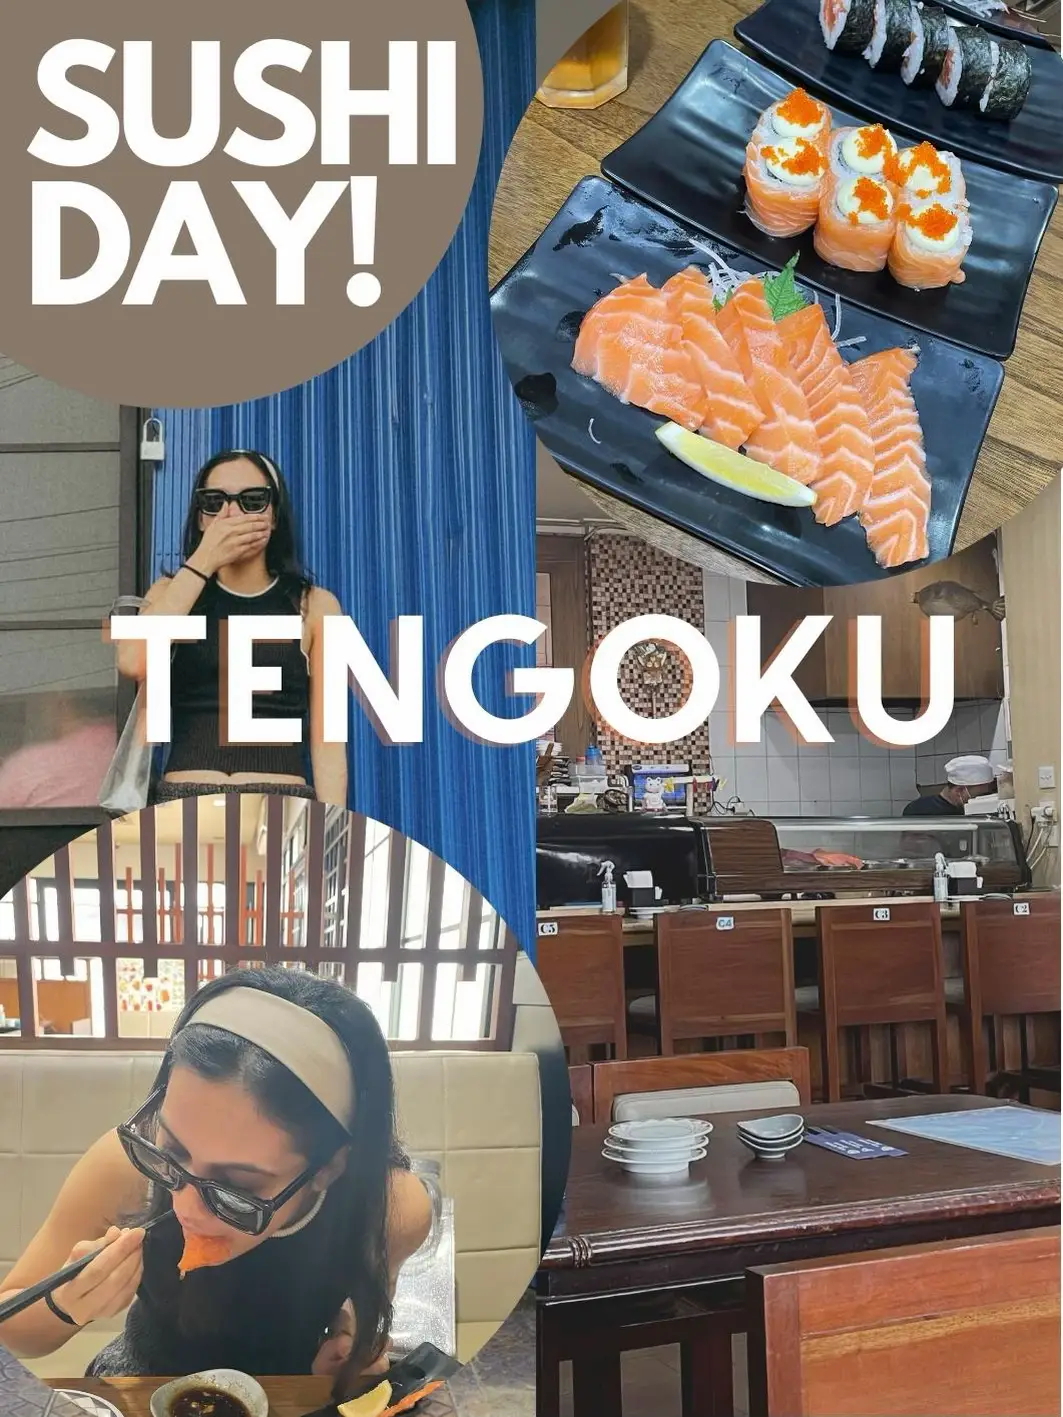 Tengoku Japanese Restaurant